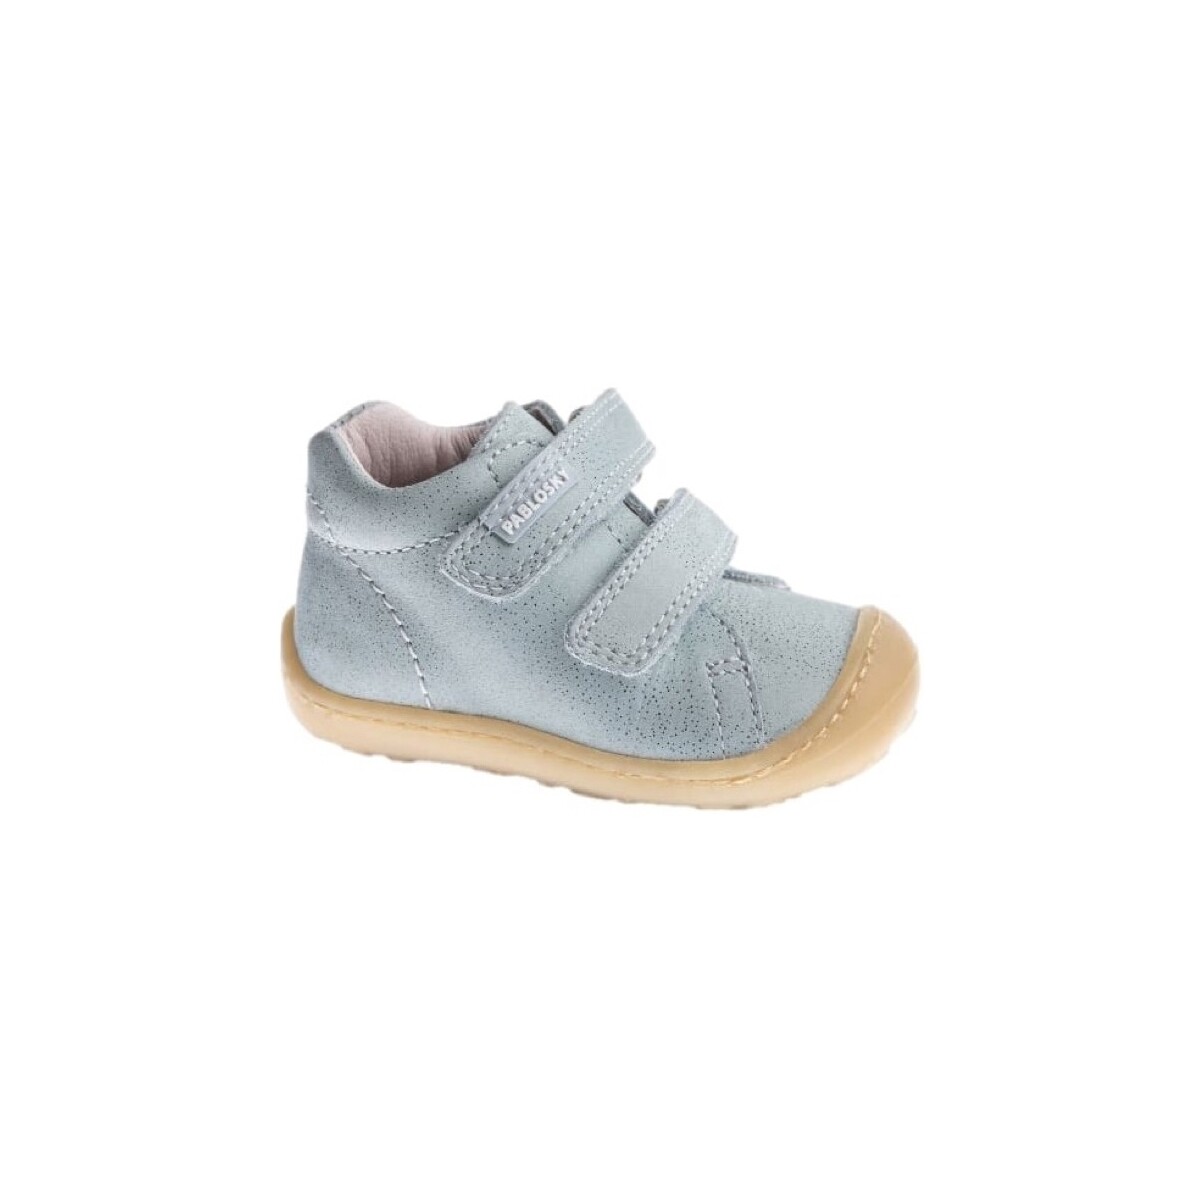 Sneakers Pablosky Baby Touba 032540 B – Touba Sorrento